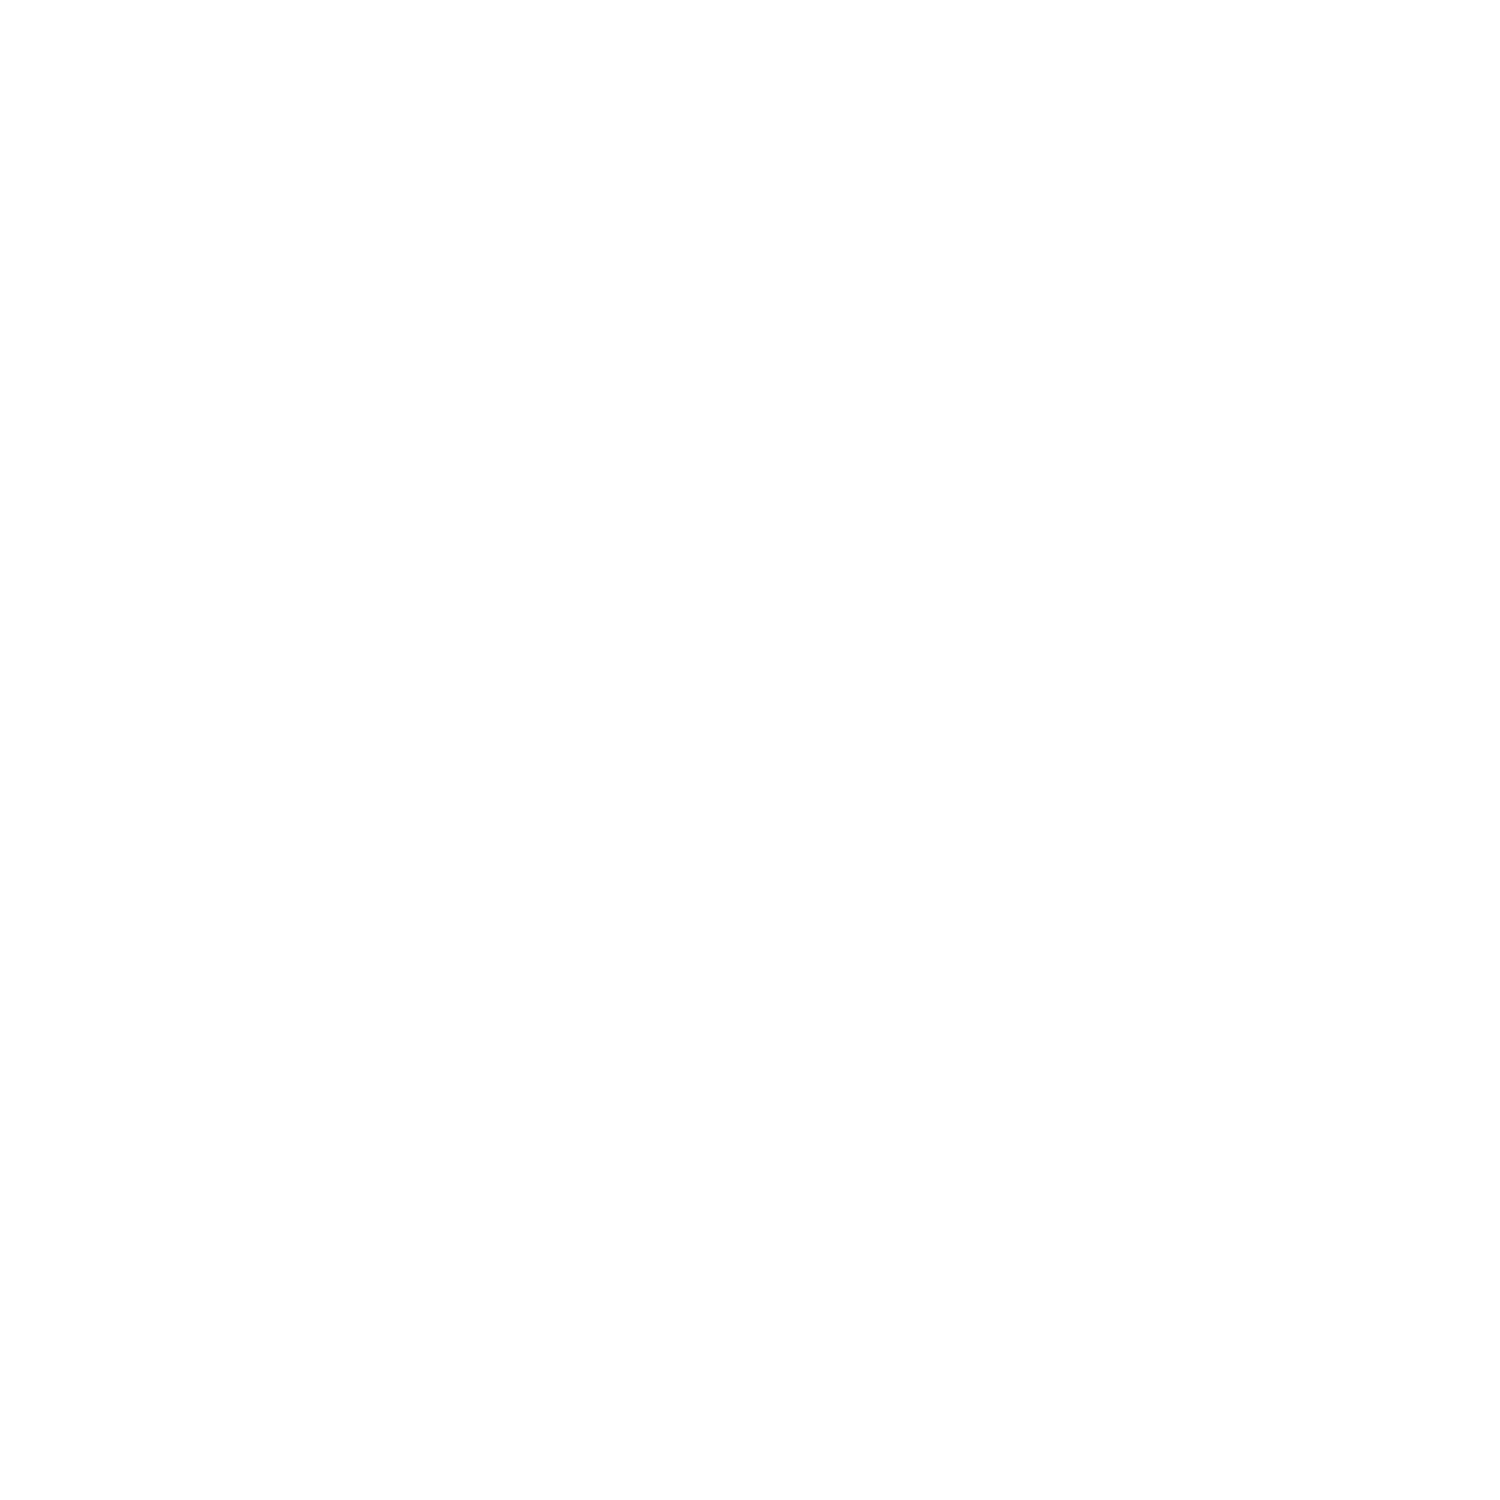 TRANS-FOX.png